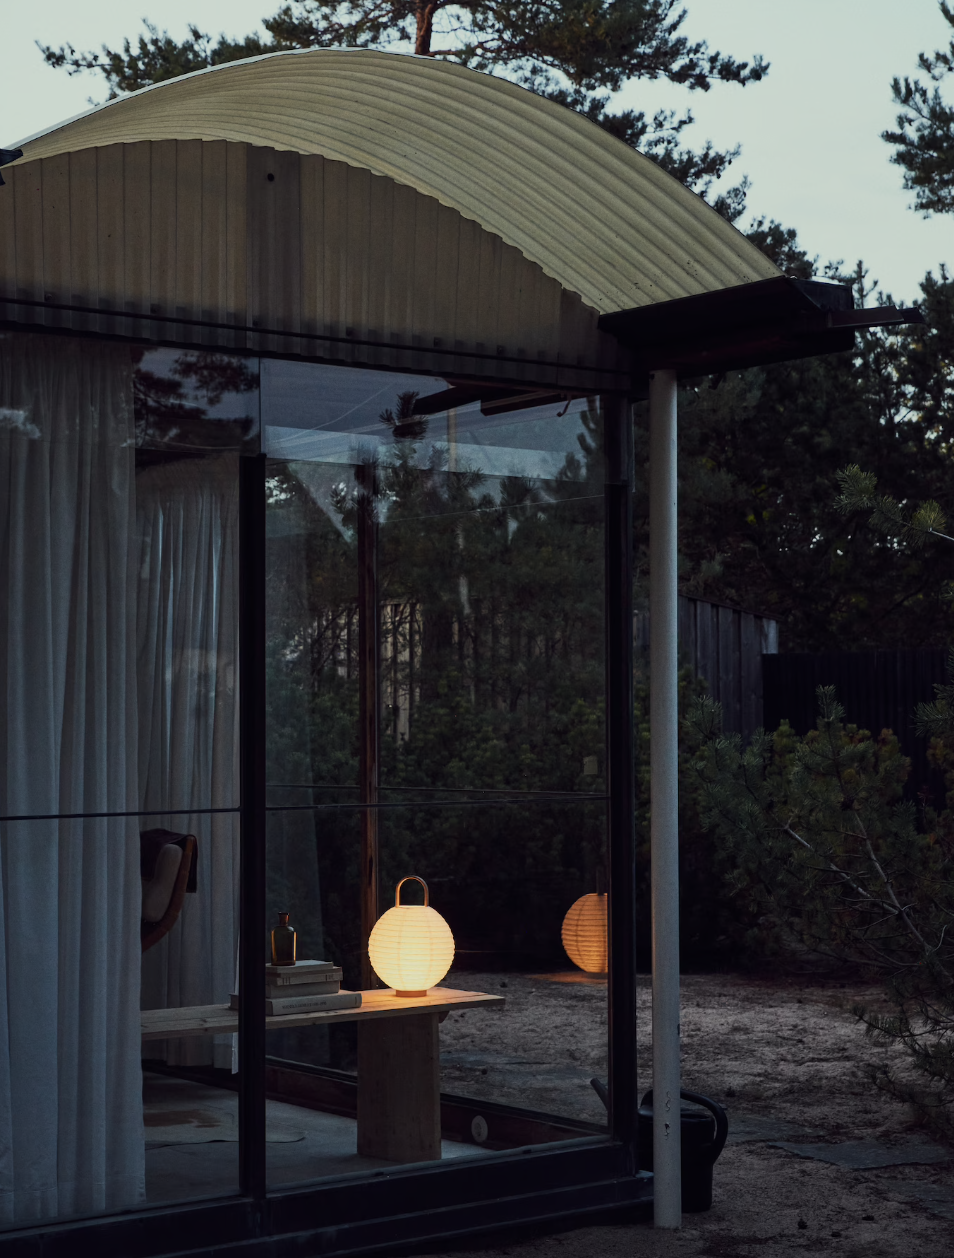 Marimekko Collaborates with Ikea on Summer Collection | Design